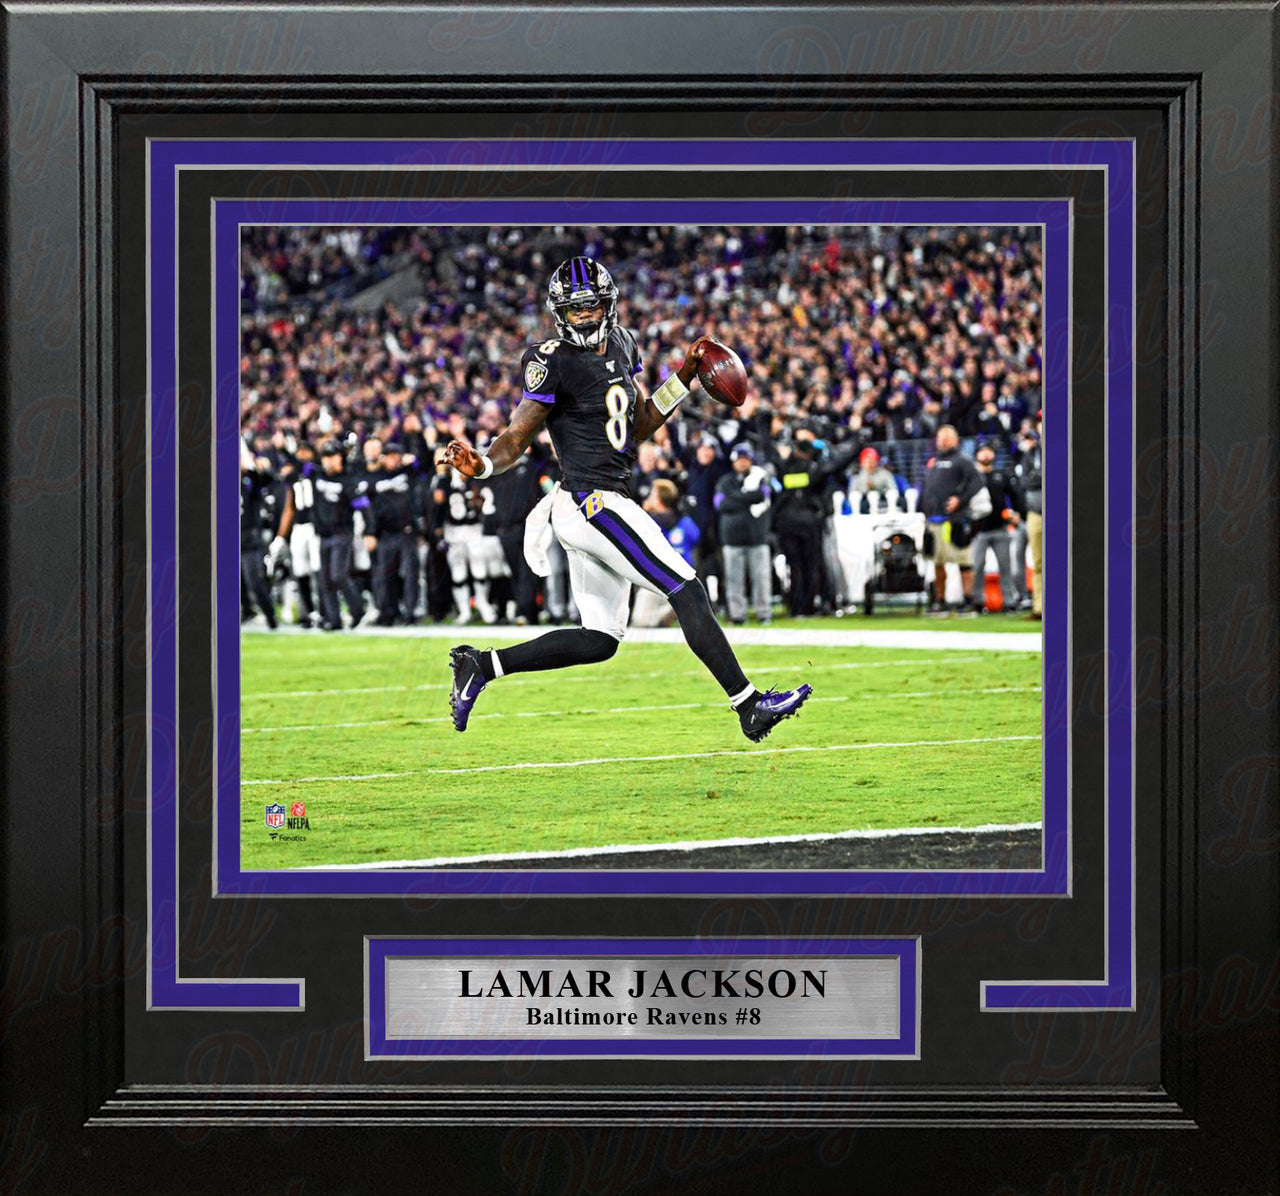 Lamar Jackson High-Stepping Touchdown Baltimore Ravens 8" x 10" Framed Football Photo - Dynasty Sports & Framing 